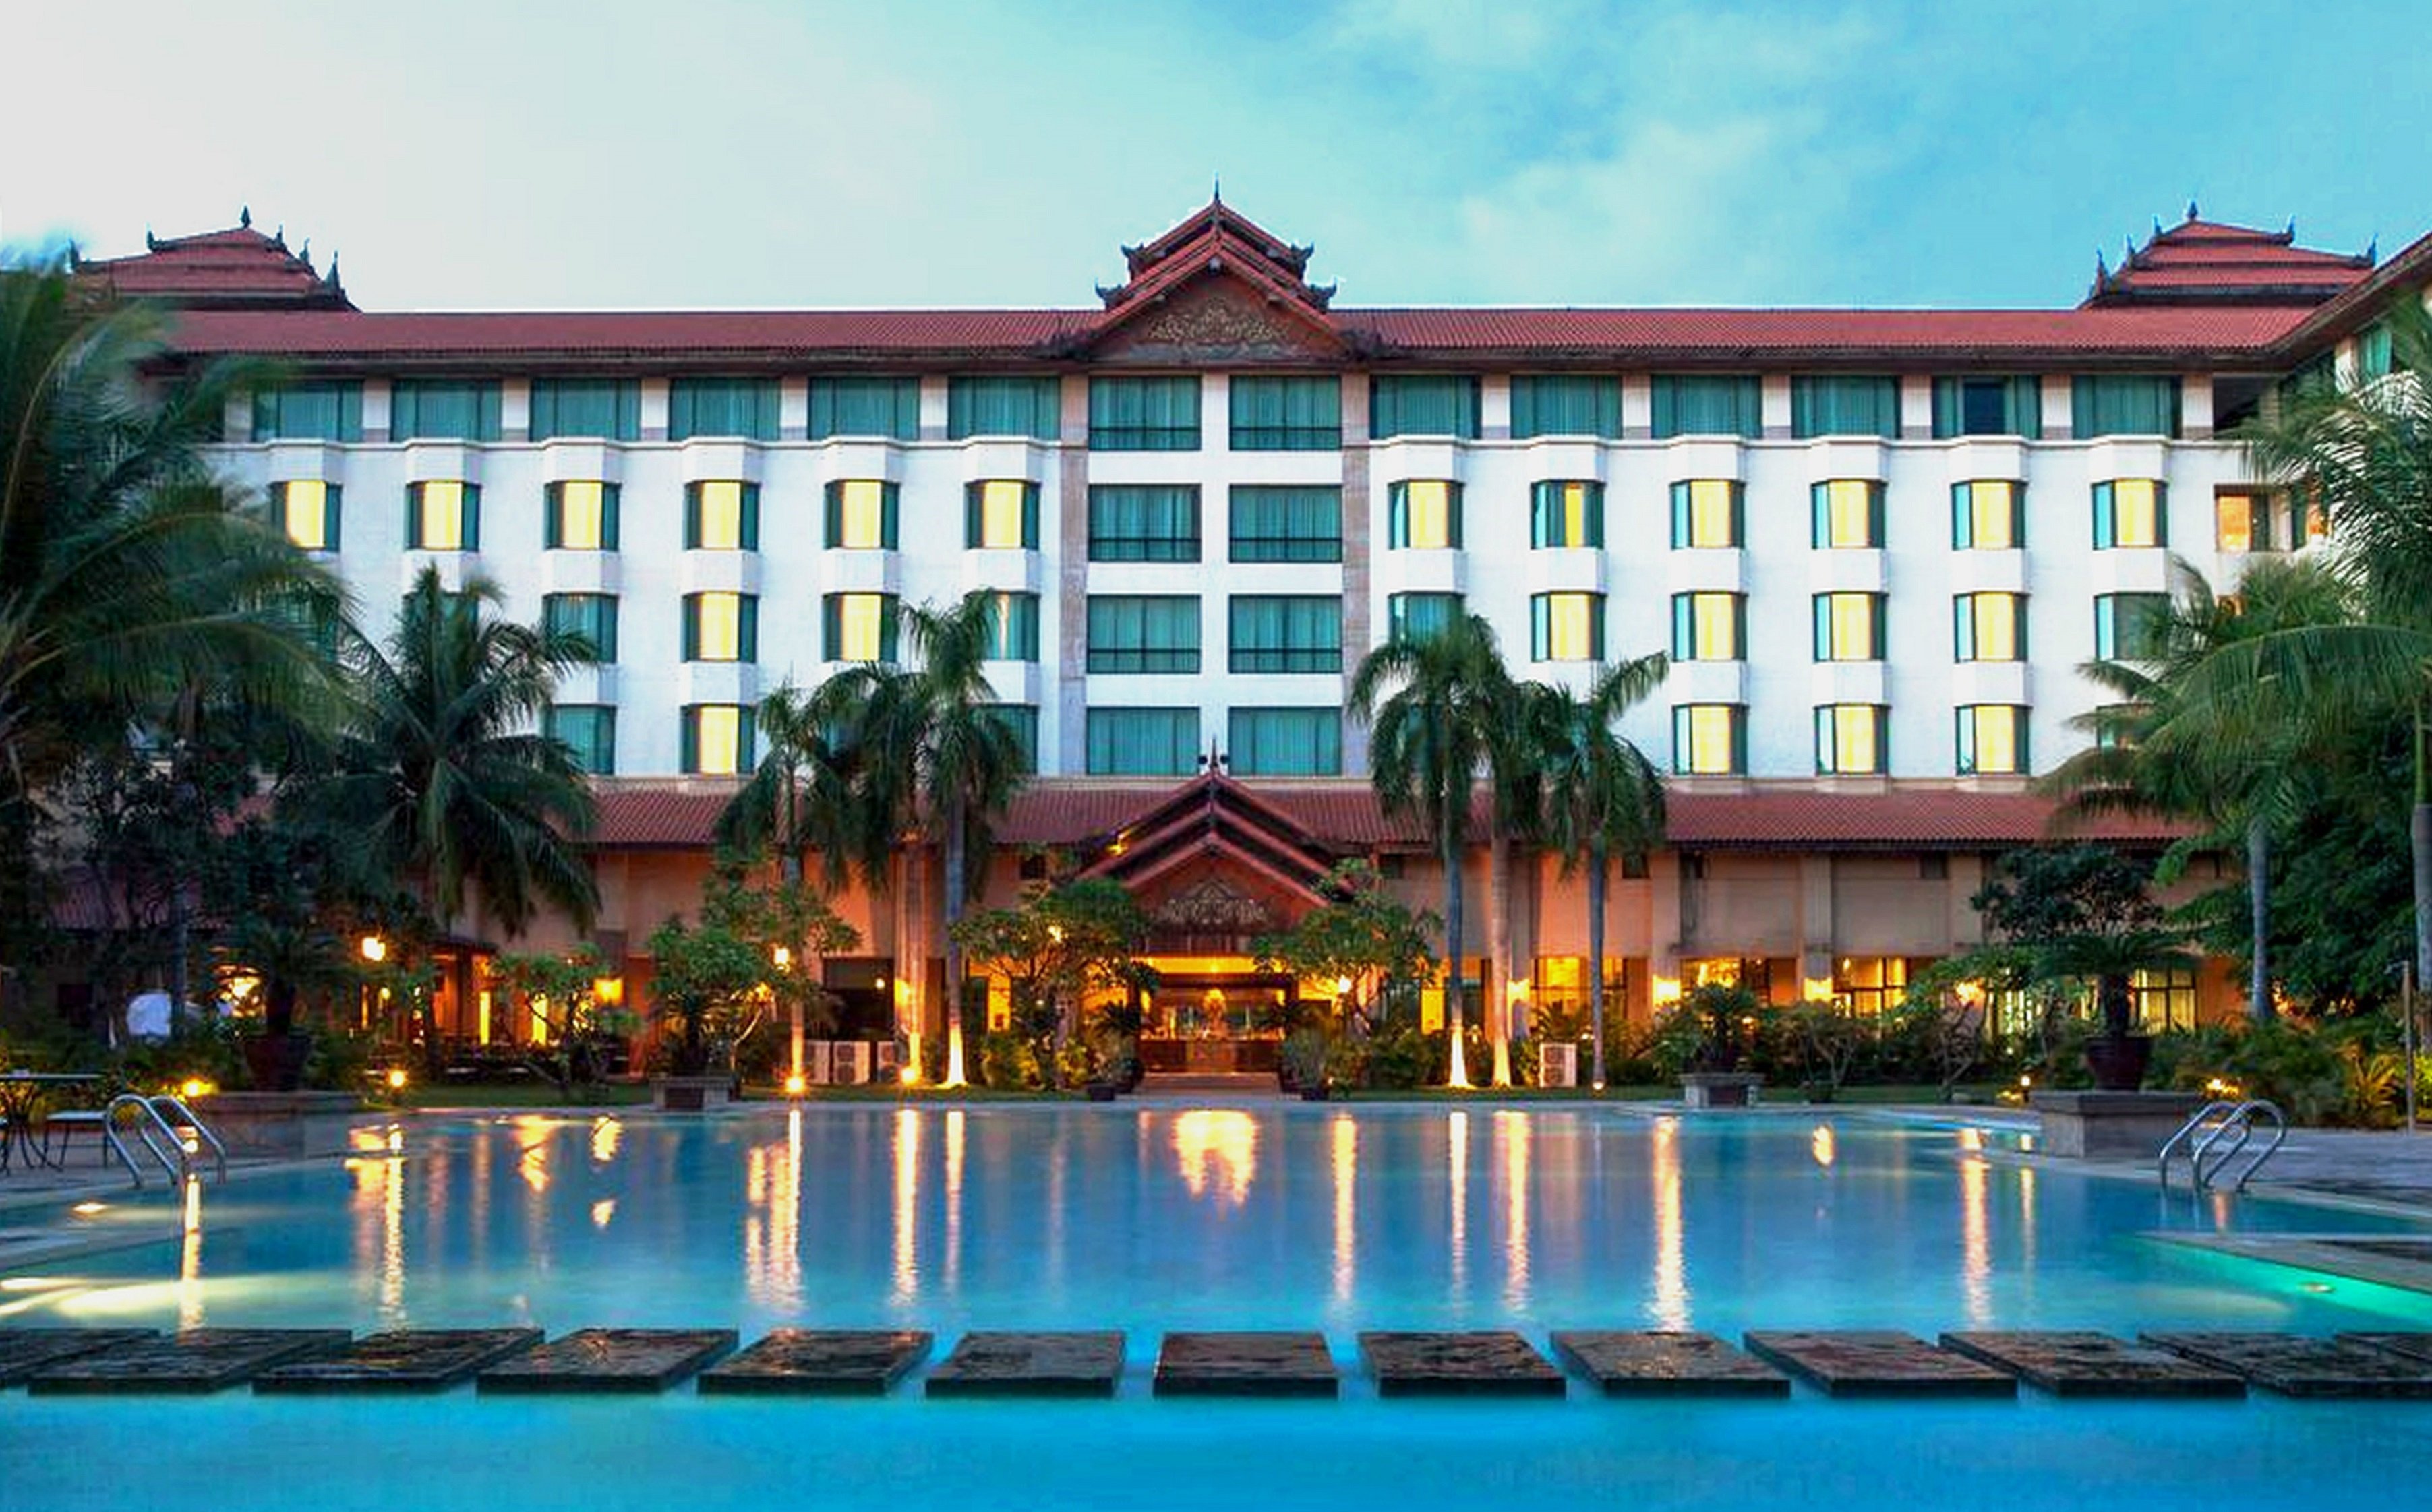 Photo of Hilton Mandalay, Mandalay, Myanmar